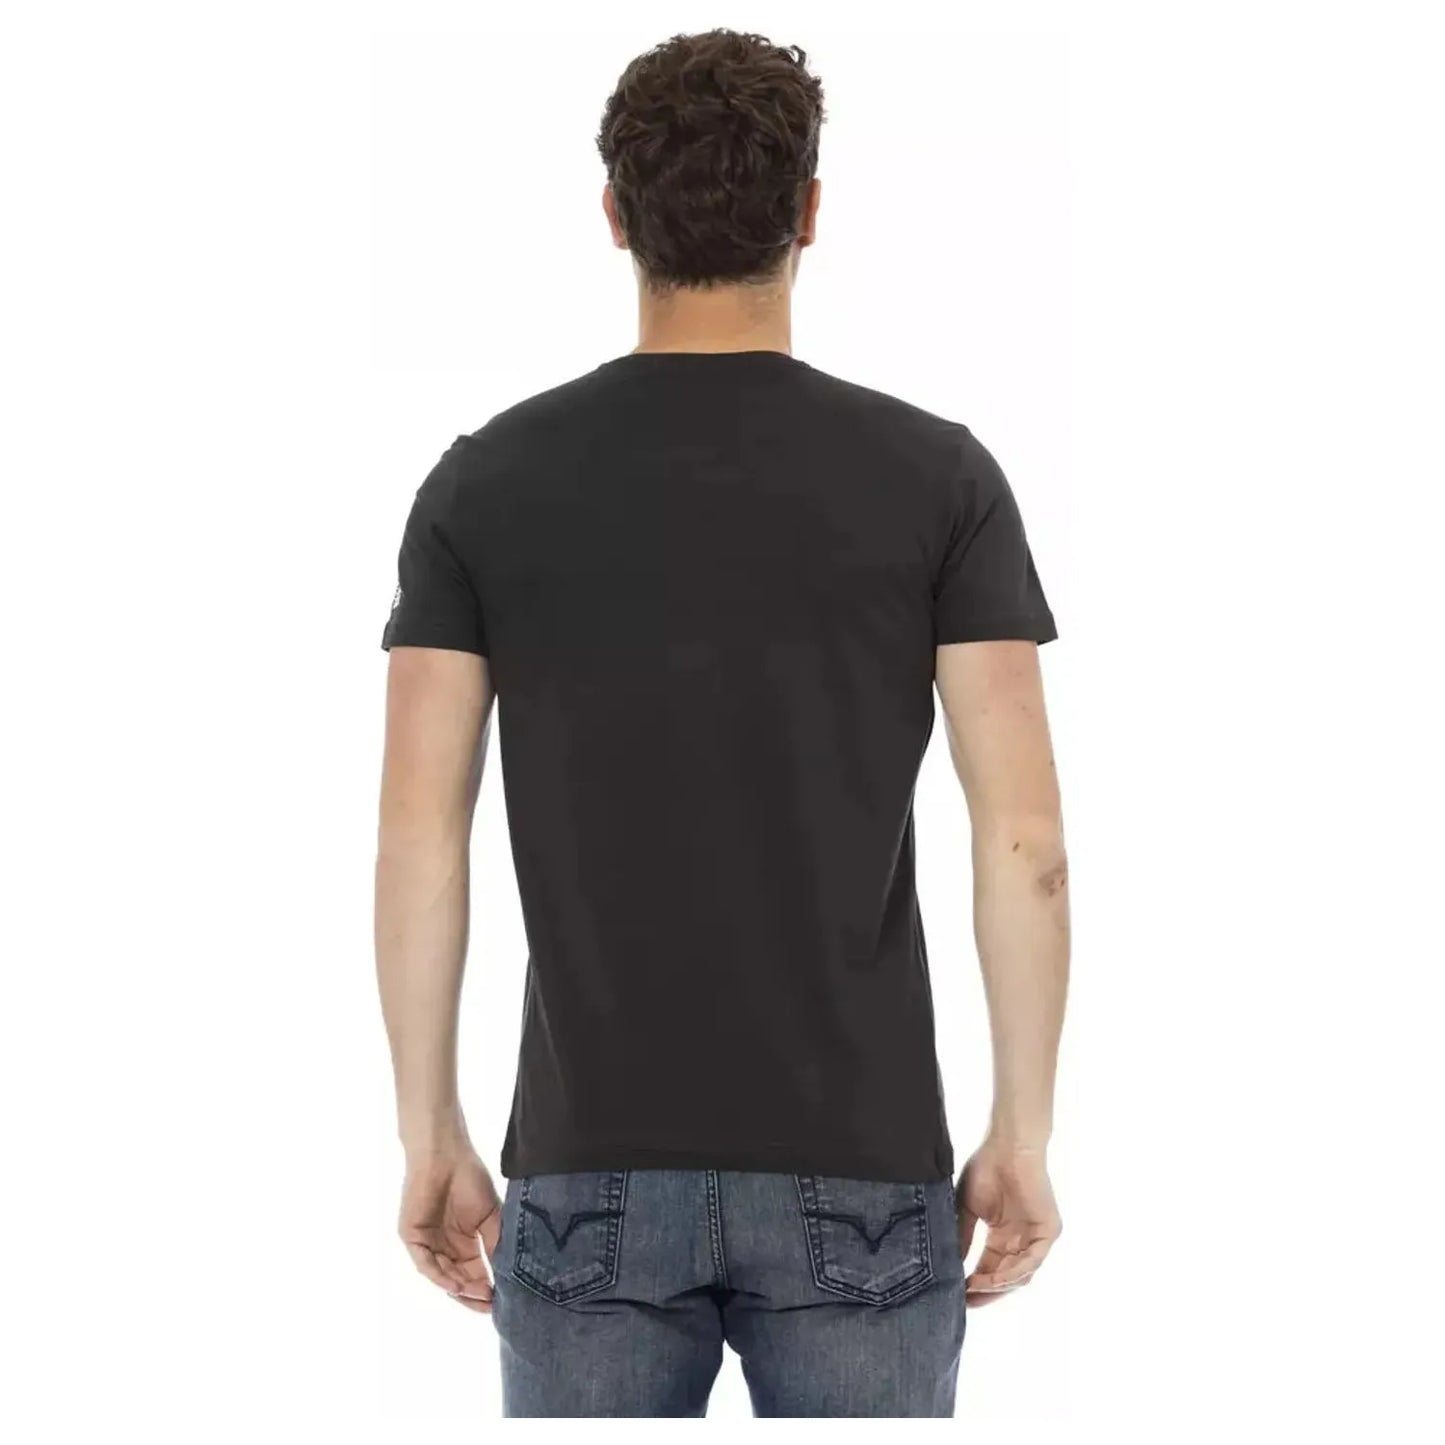 Trussardi Action Sleek Black Print Tee - Casual Elegance Redefined black-cotton-t-shirt-71